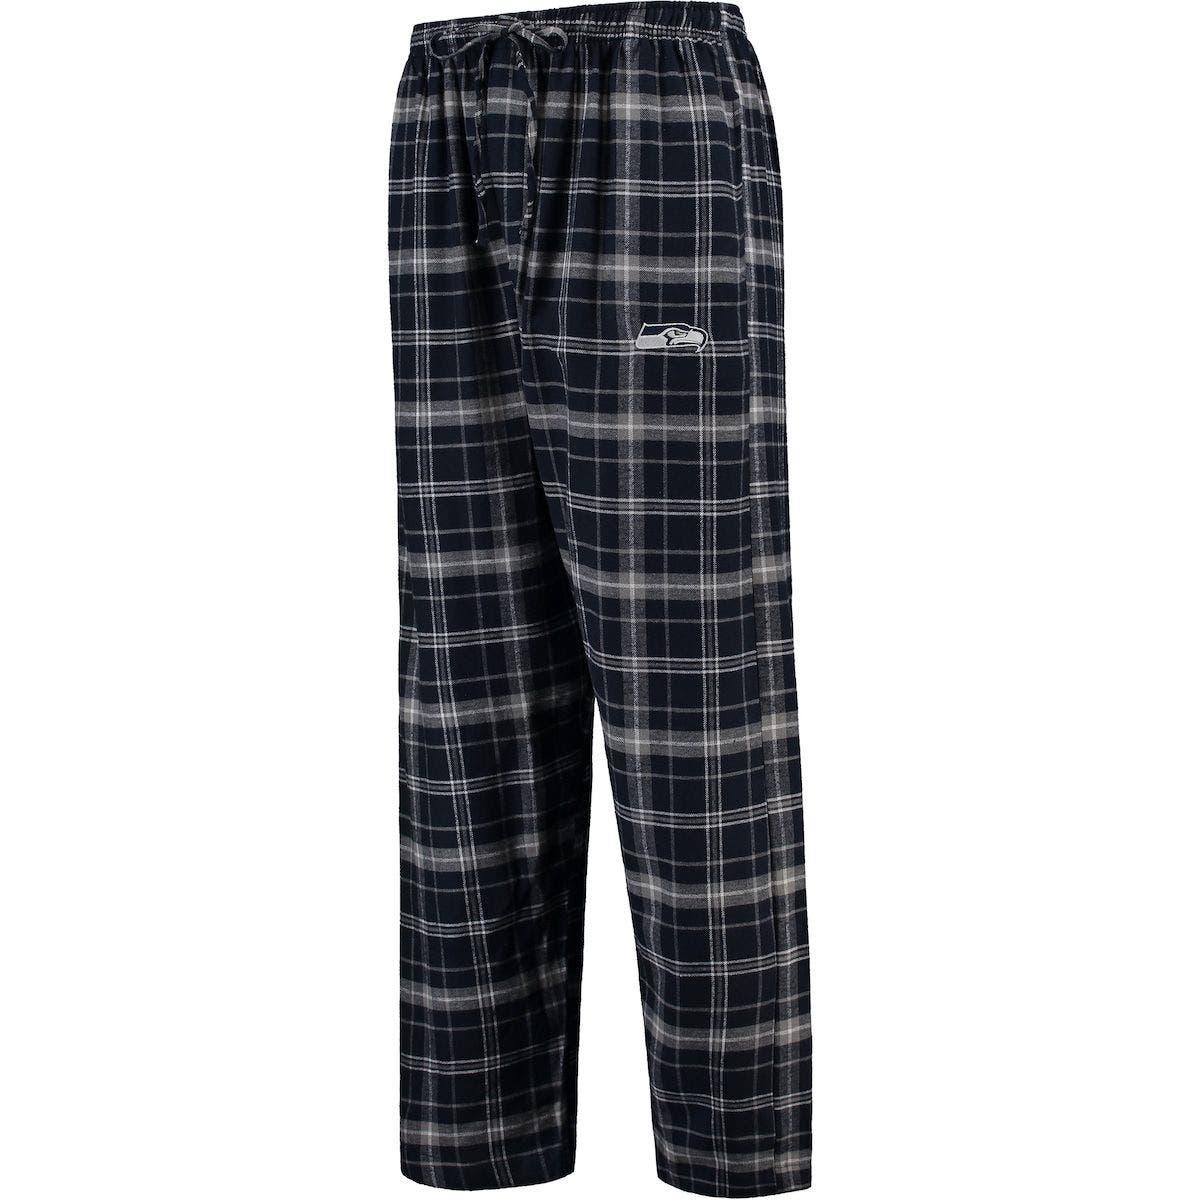 Concepts Sport Texas Tech University Mens Pajama Pants Plaid Pajama Bottoms 